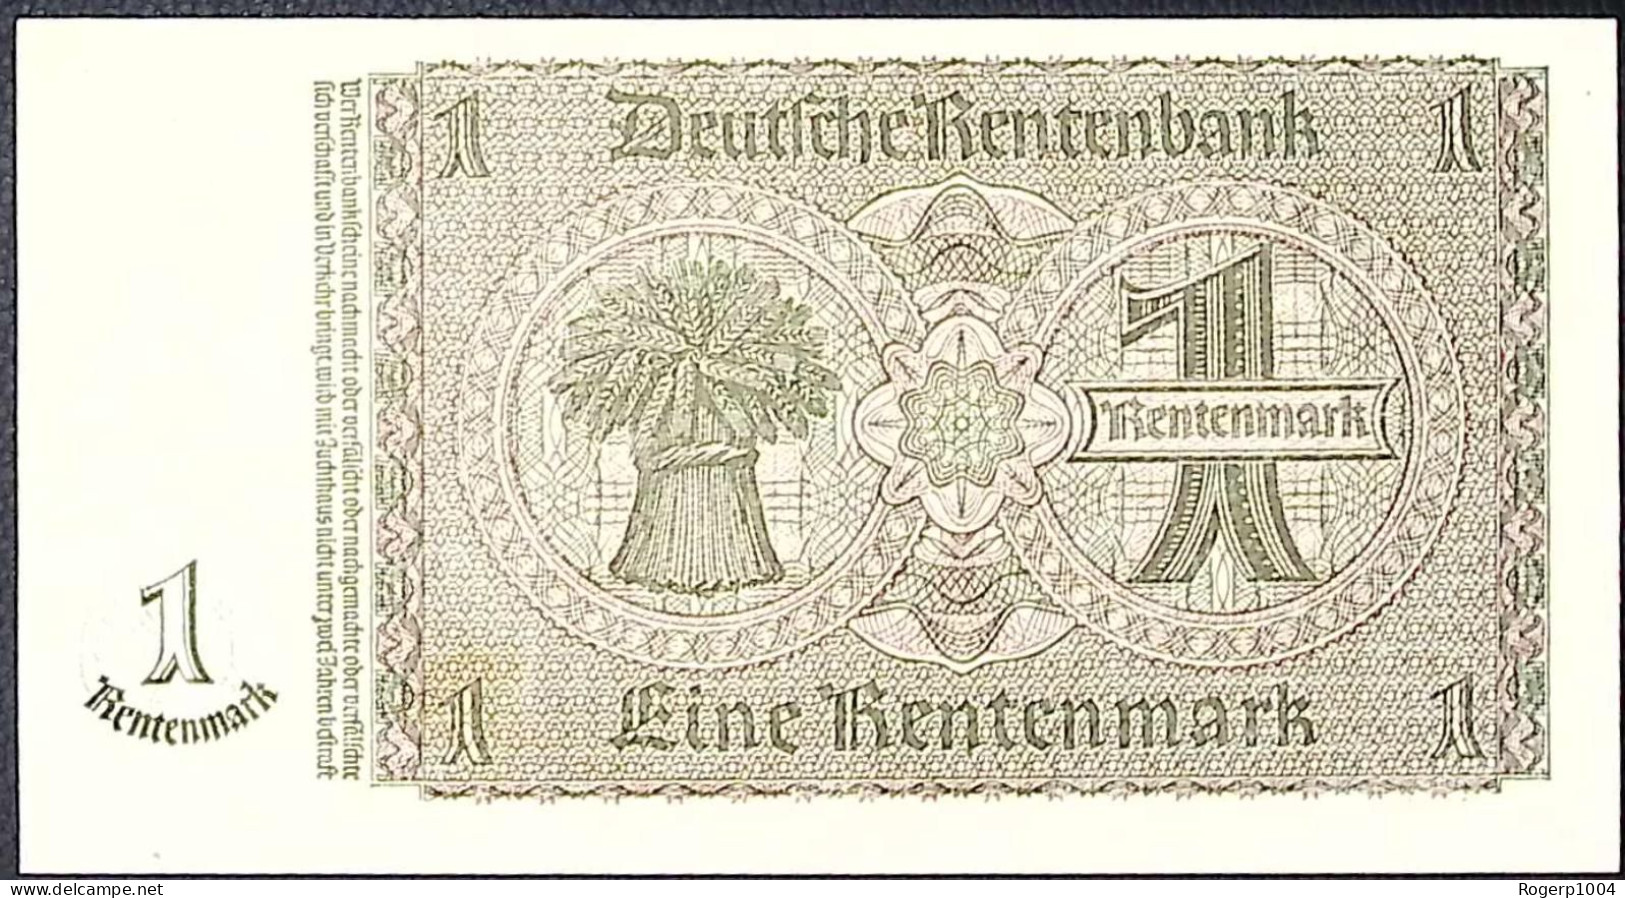 Allemagne/GERMANY * 1 Rentenmark * Date 30/01/1937 * Etat/Grade NEUF/UNC * - 2° Guerra Mondiale